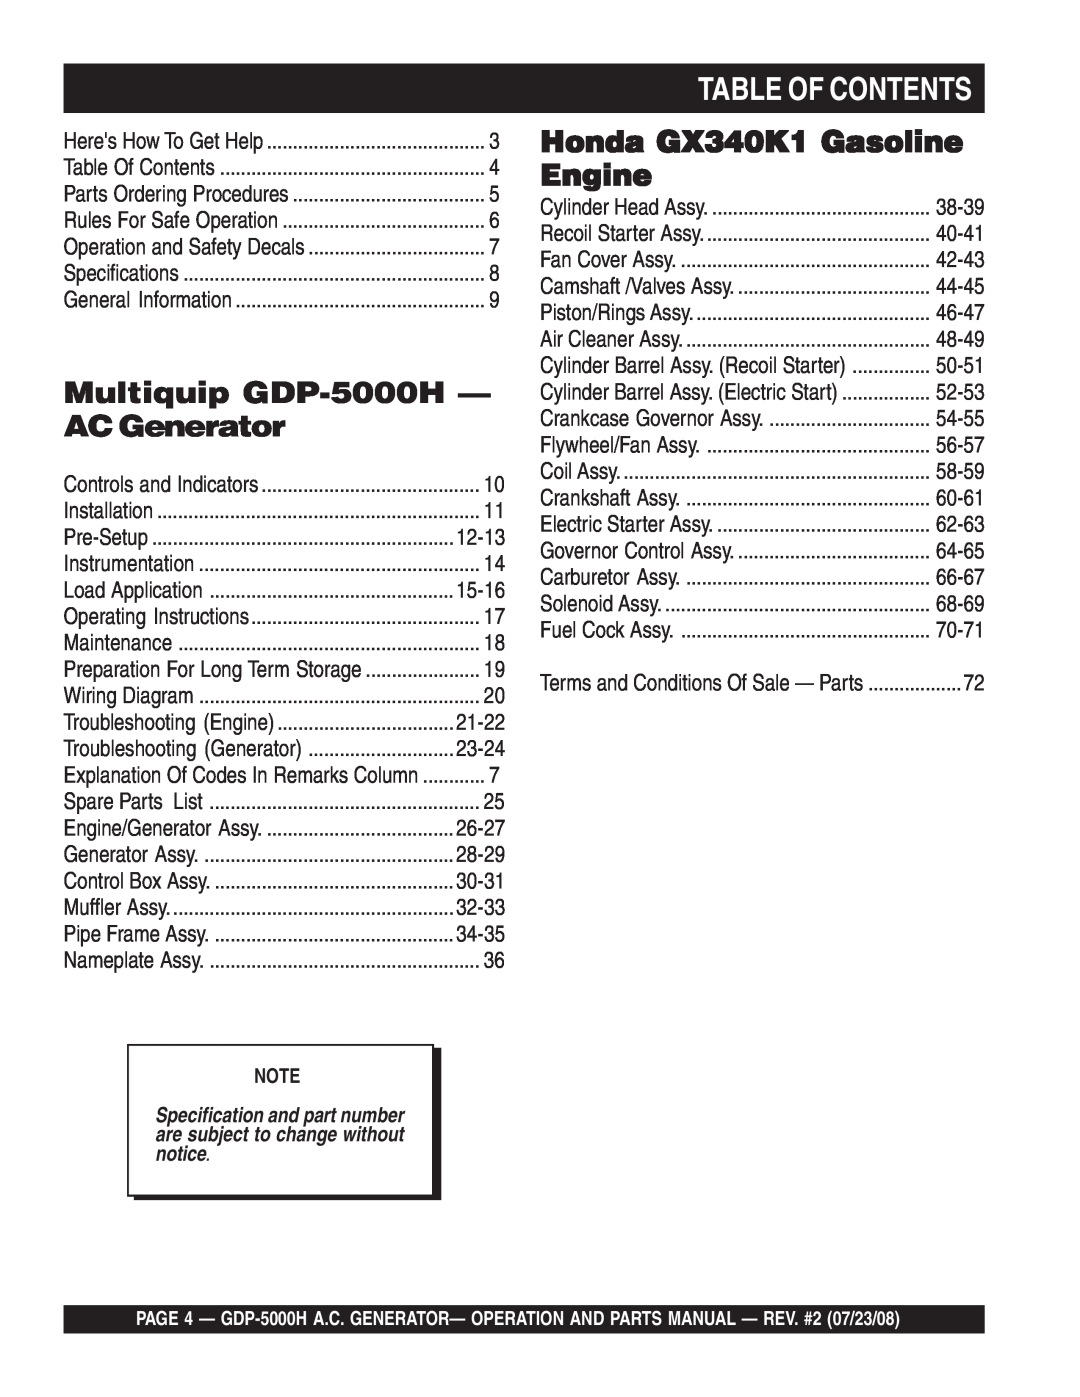 Multiquip GBP5000H manual Table Of Contents, Multiquip GDP-5000H - AC Generator, Honda GX340K1 Gasoline Engine 